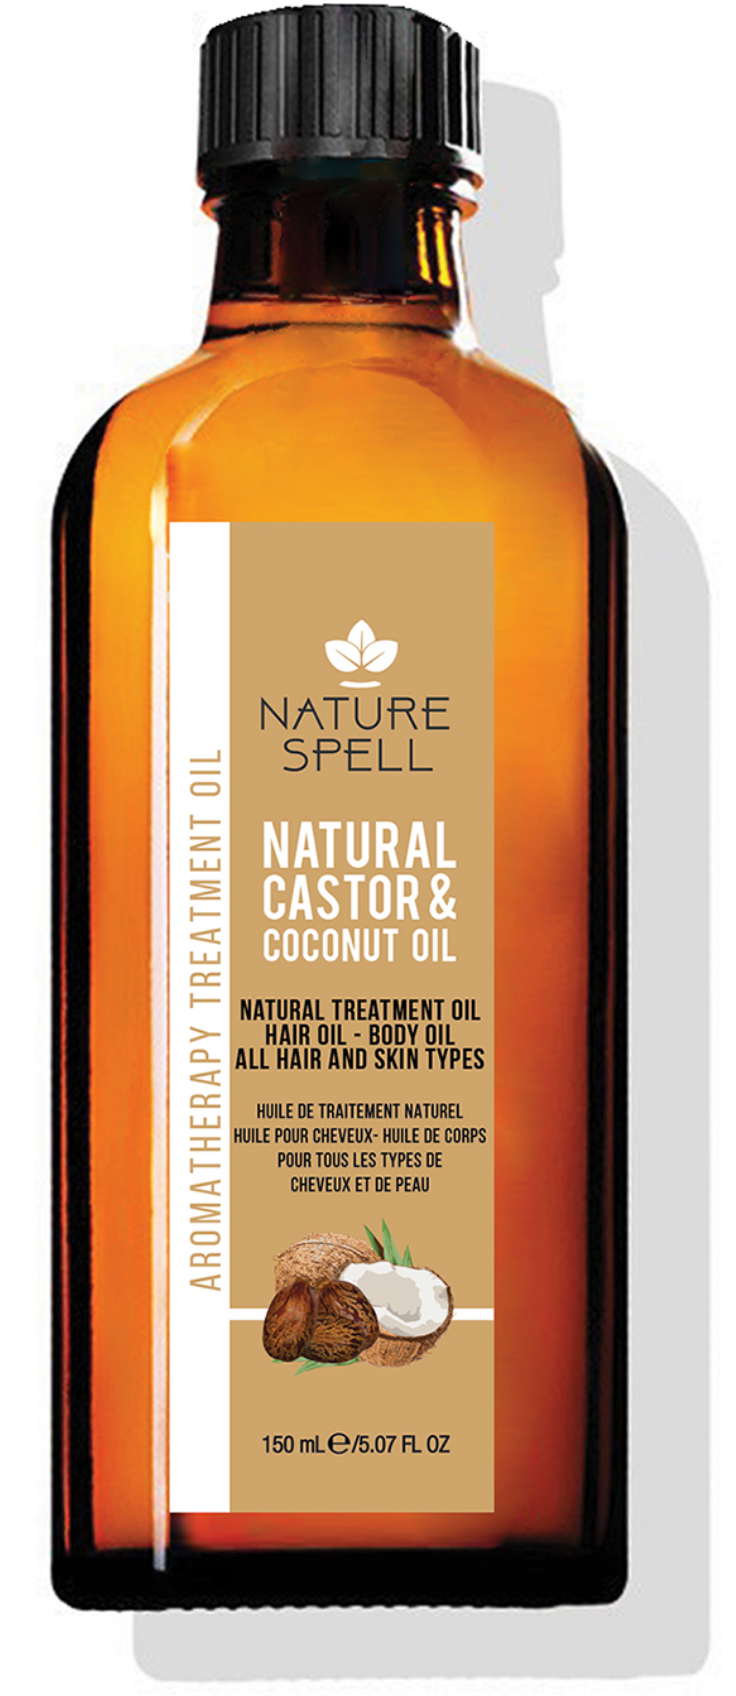 Nature Spell - Natural Castor & Coconut Oil,150 ML